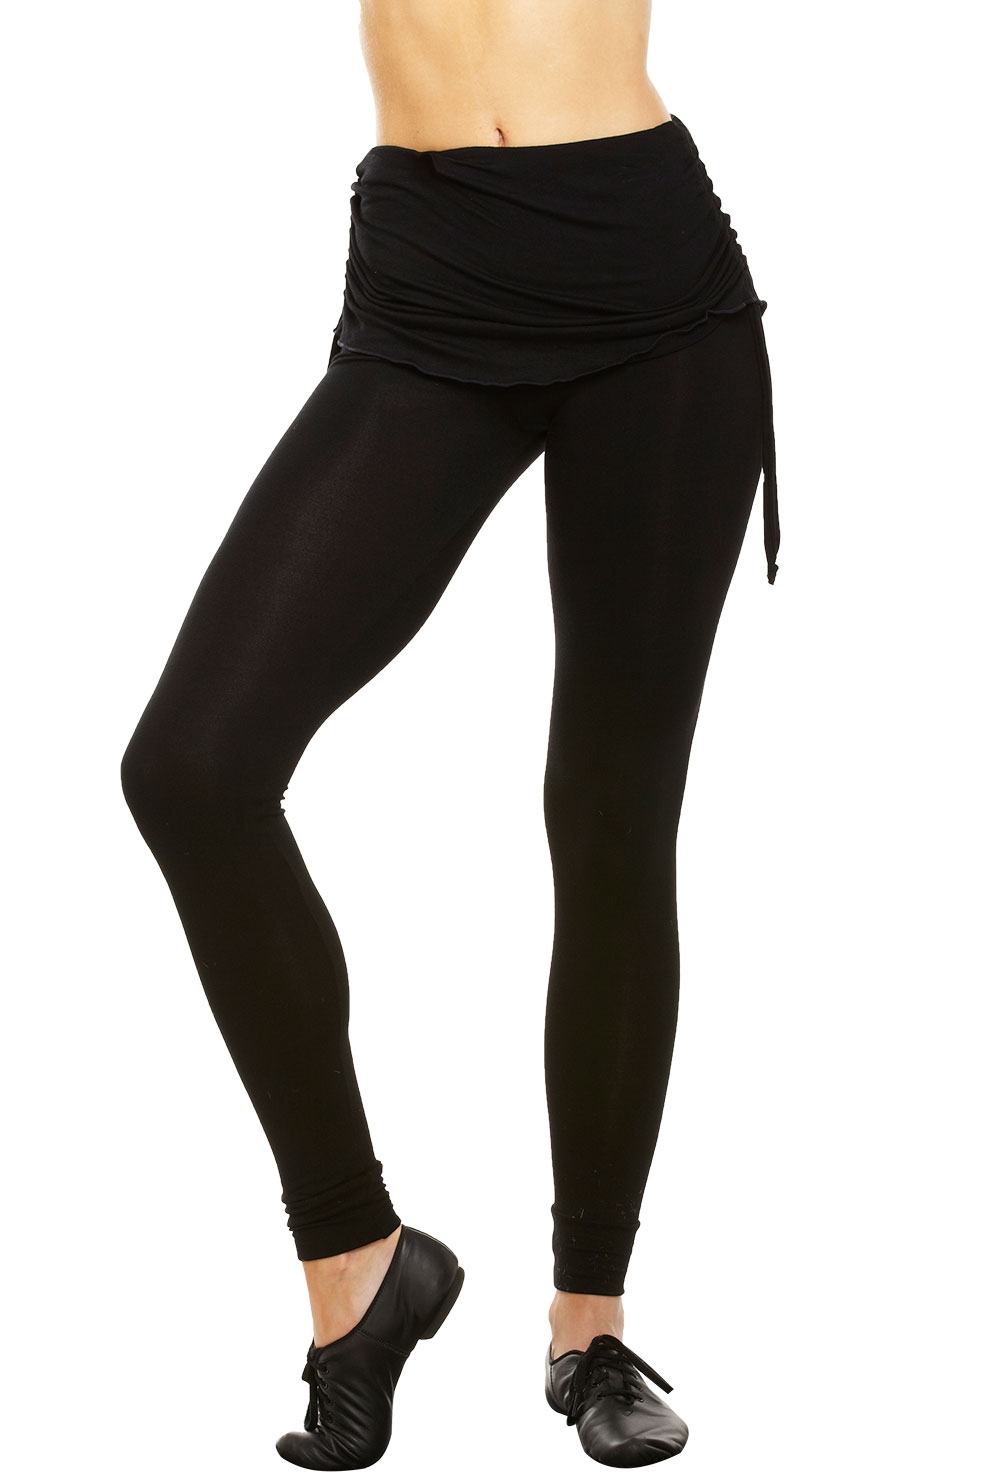 Shop Intermezzo Skirted leggings 5147 - Porselli Dancewear